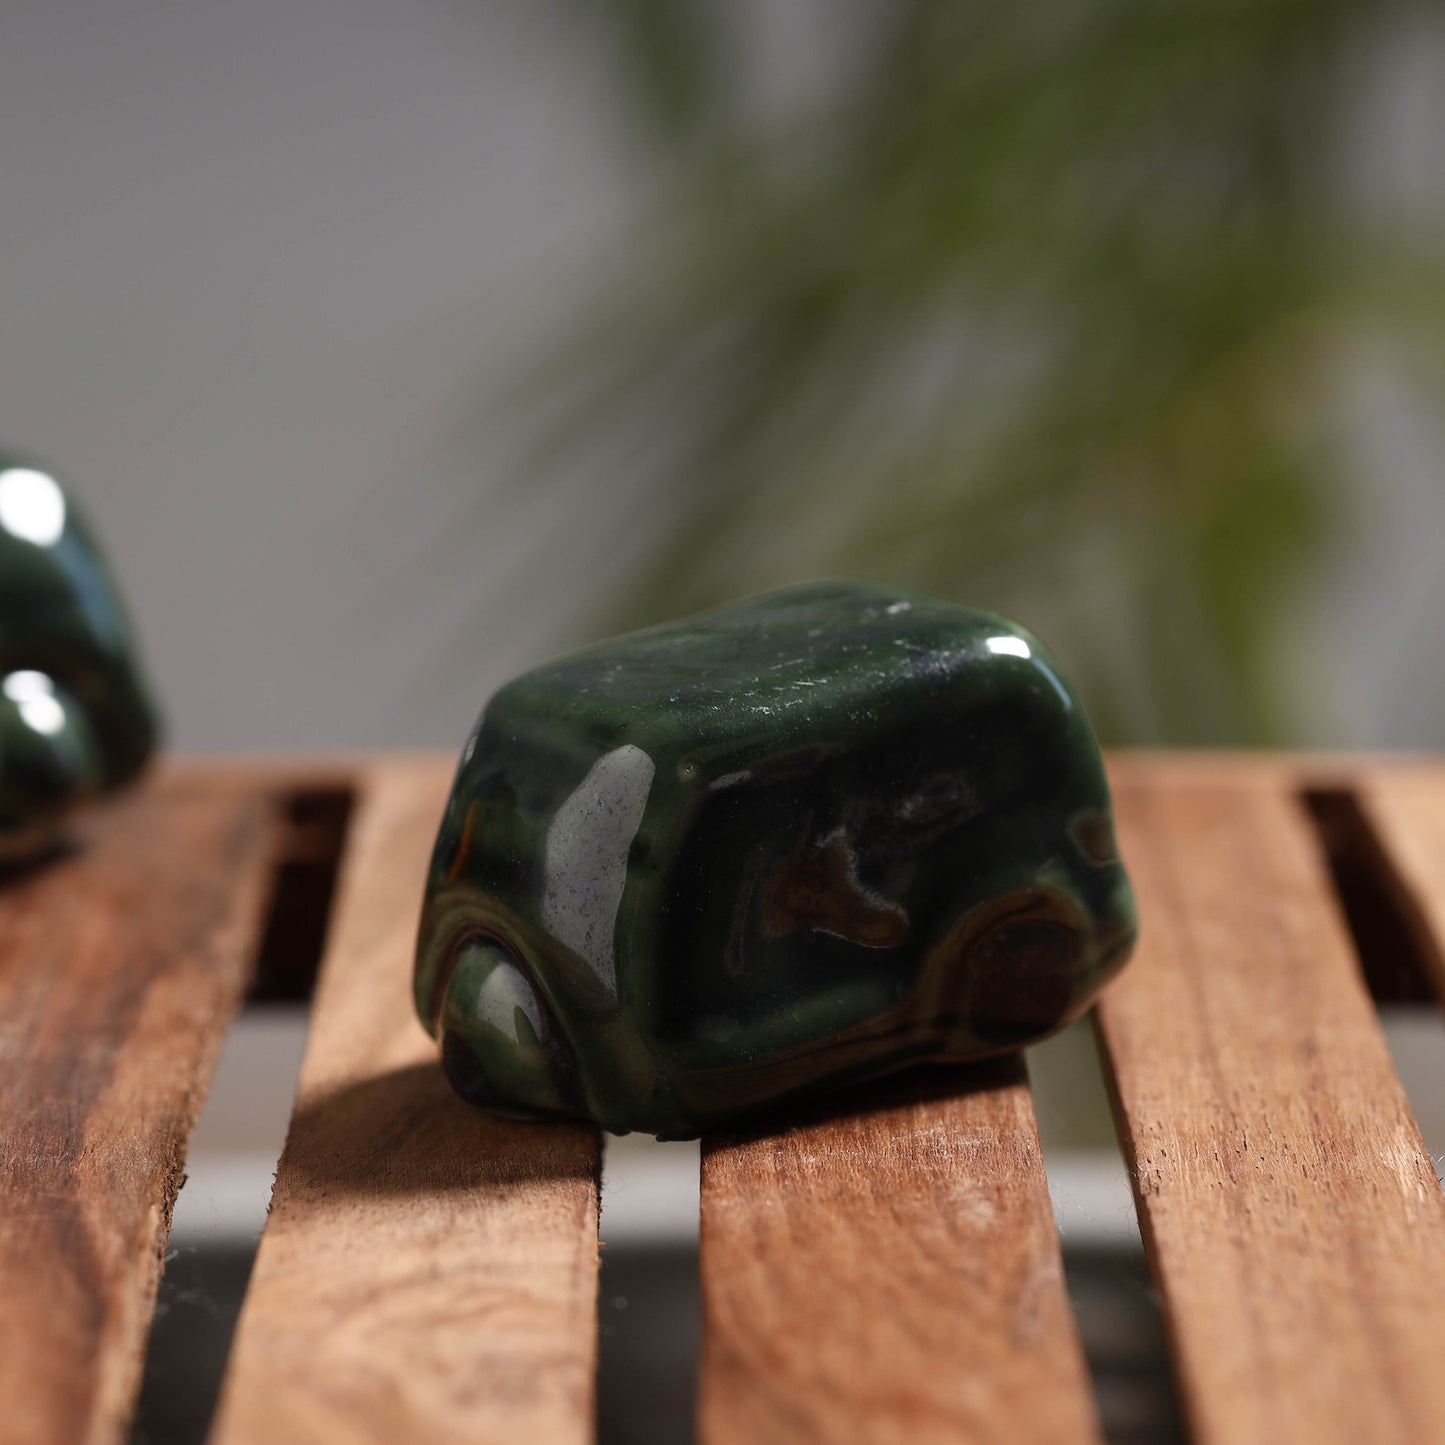 Auto Rickshaw - Handcrafted Ceramic Toys (Set of 2)